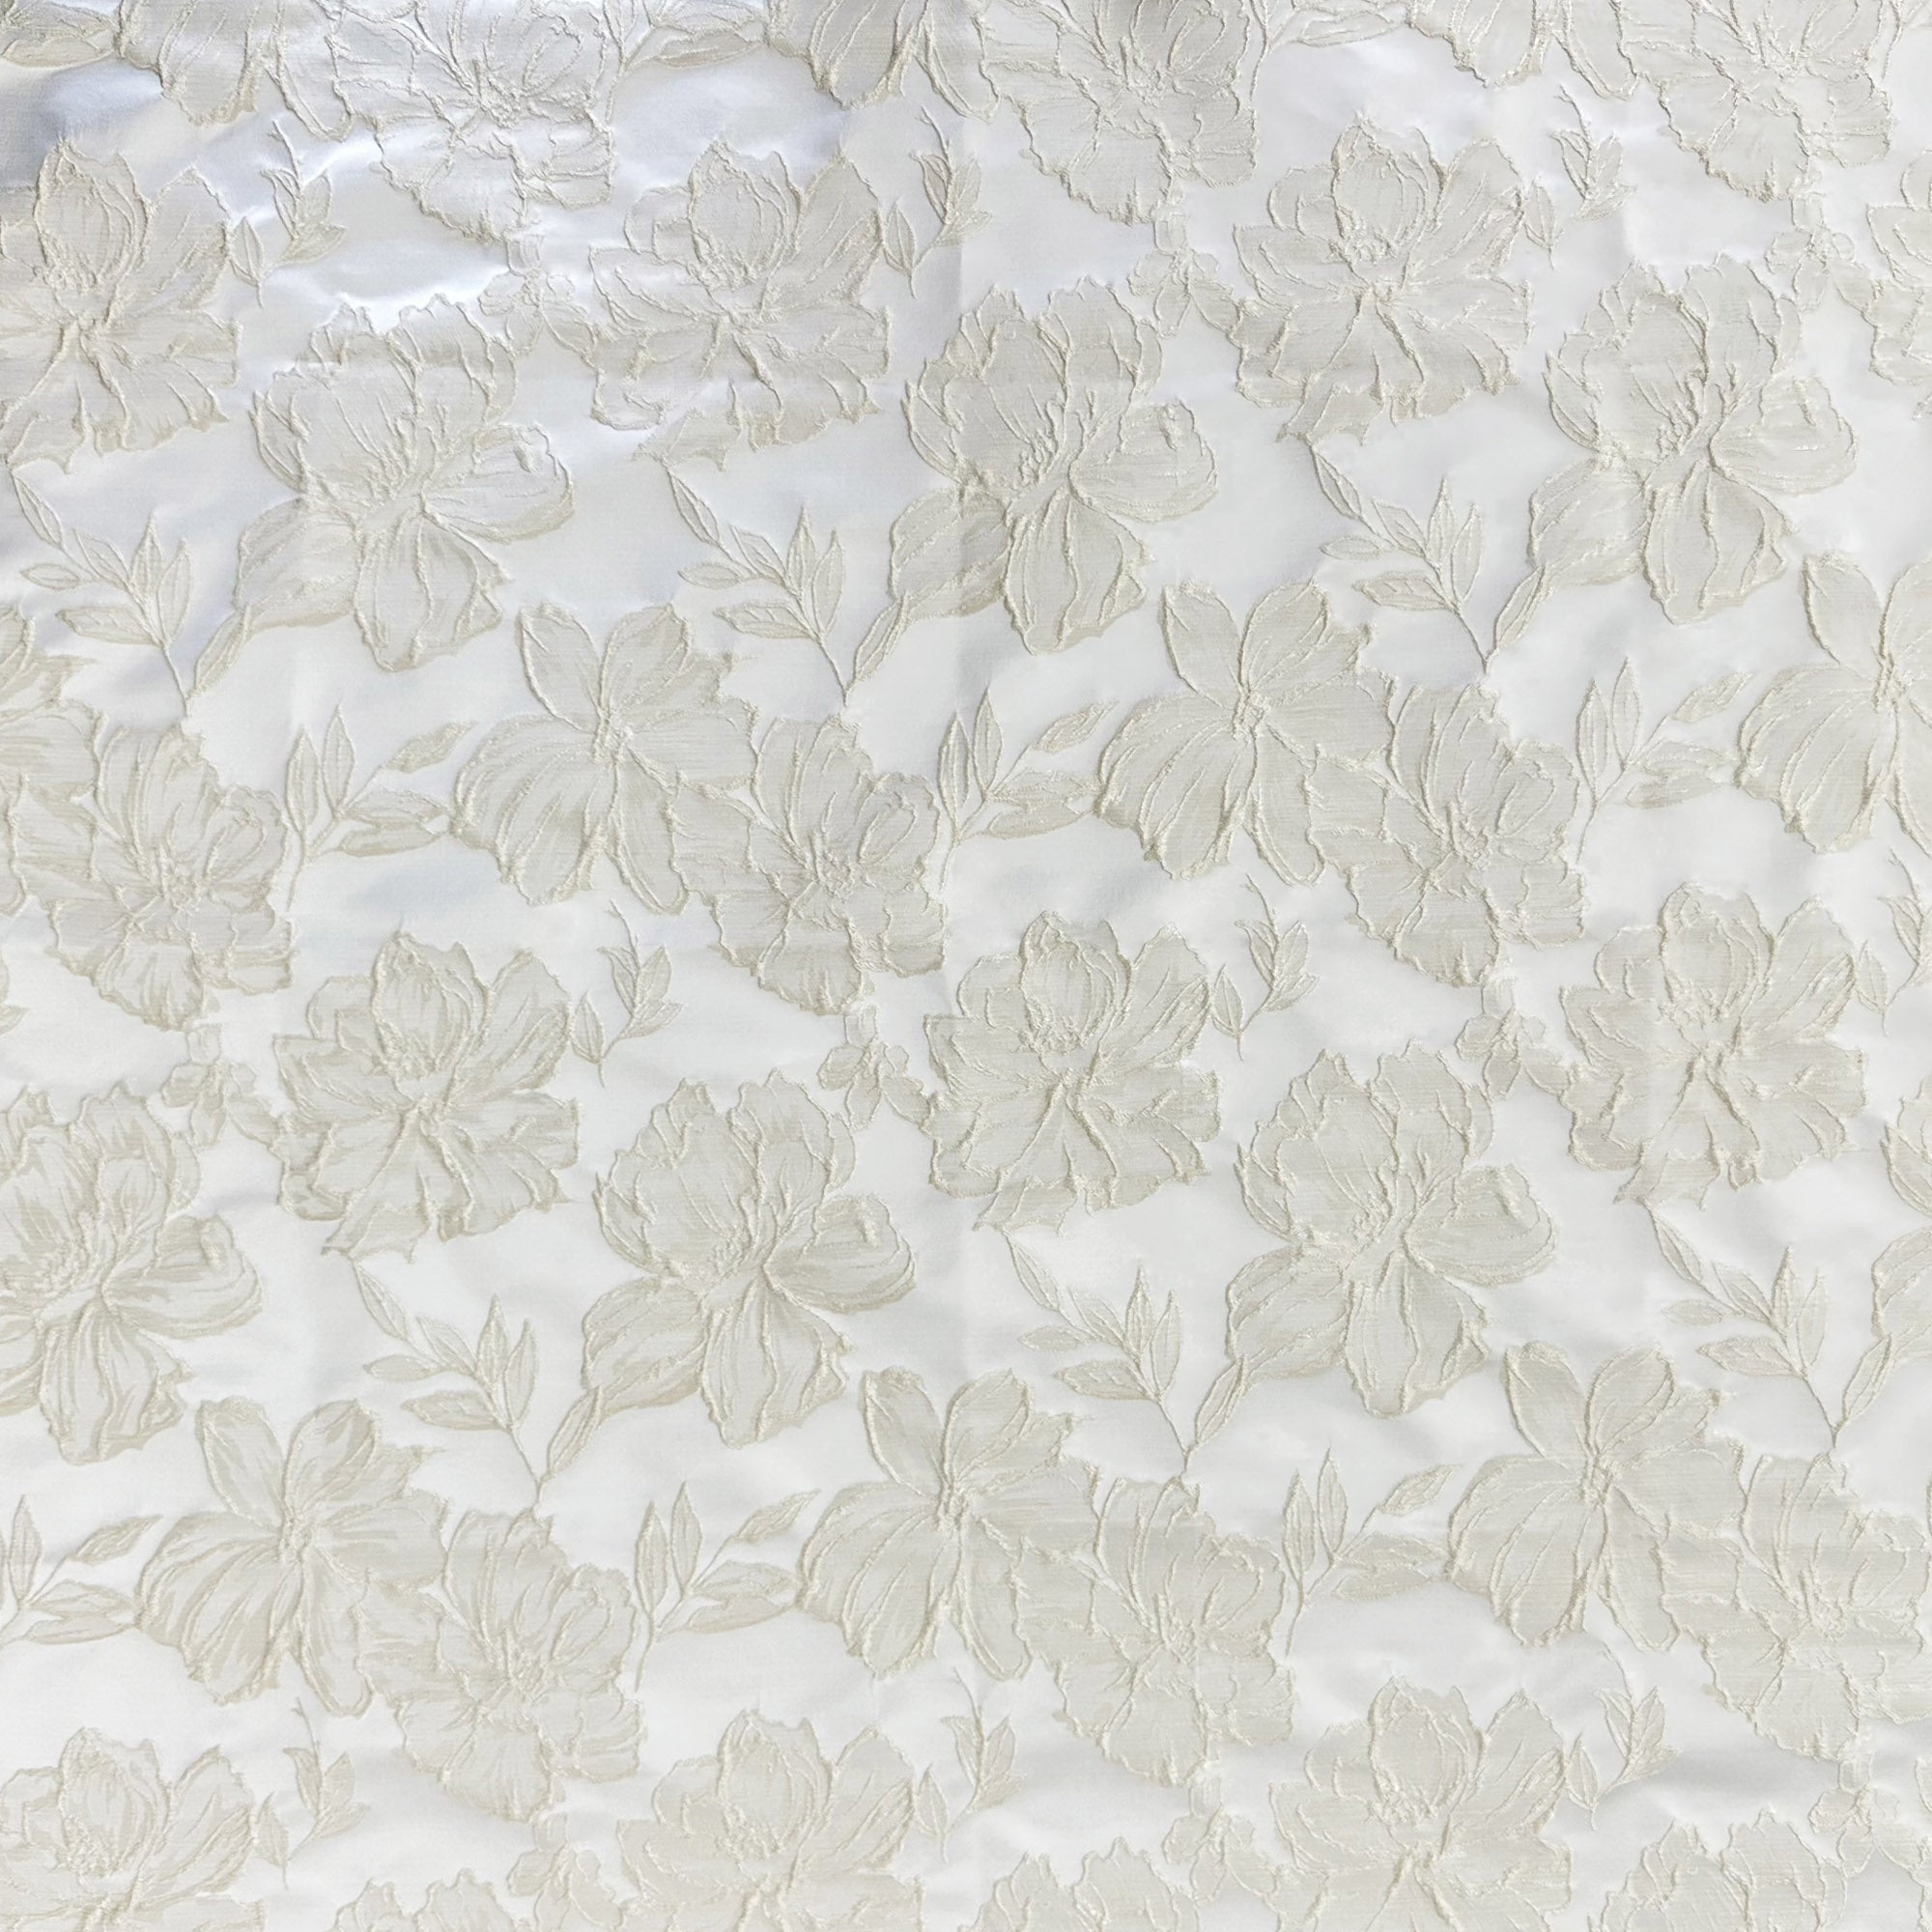 Haiden Fabric | Shiny Floral Jacquard